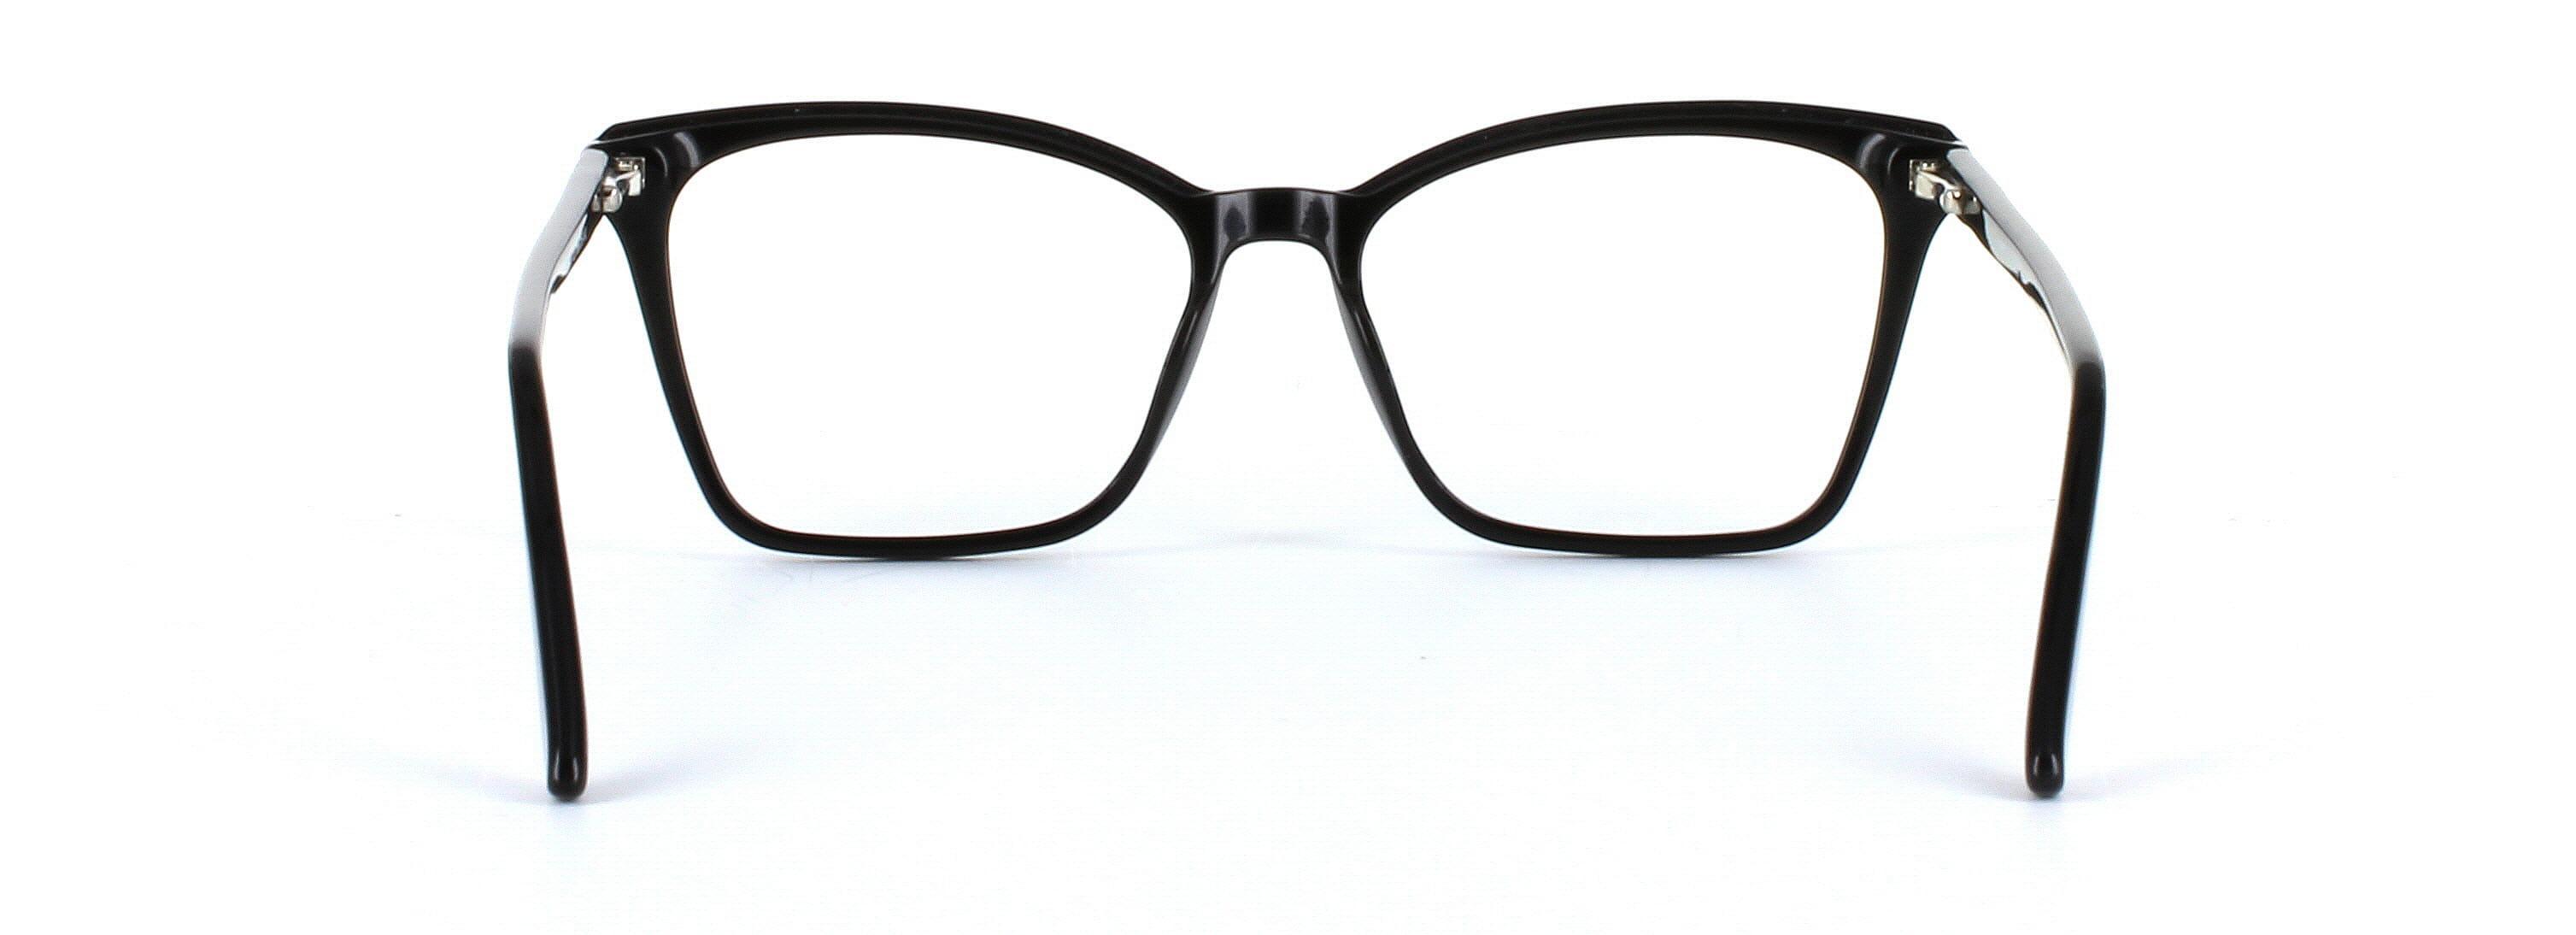 Caelan Black Full Rim Square Plastic Glasses - Image View 3